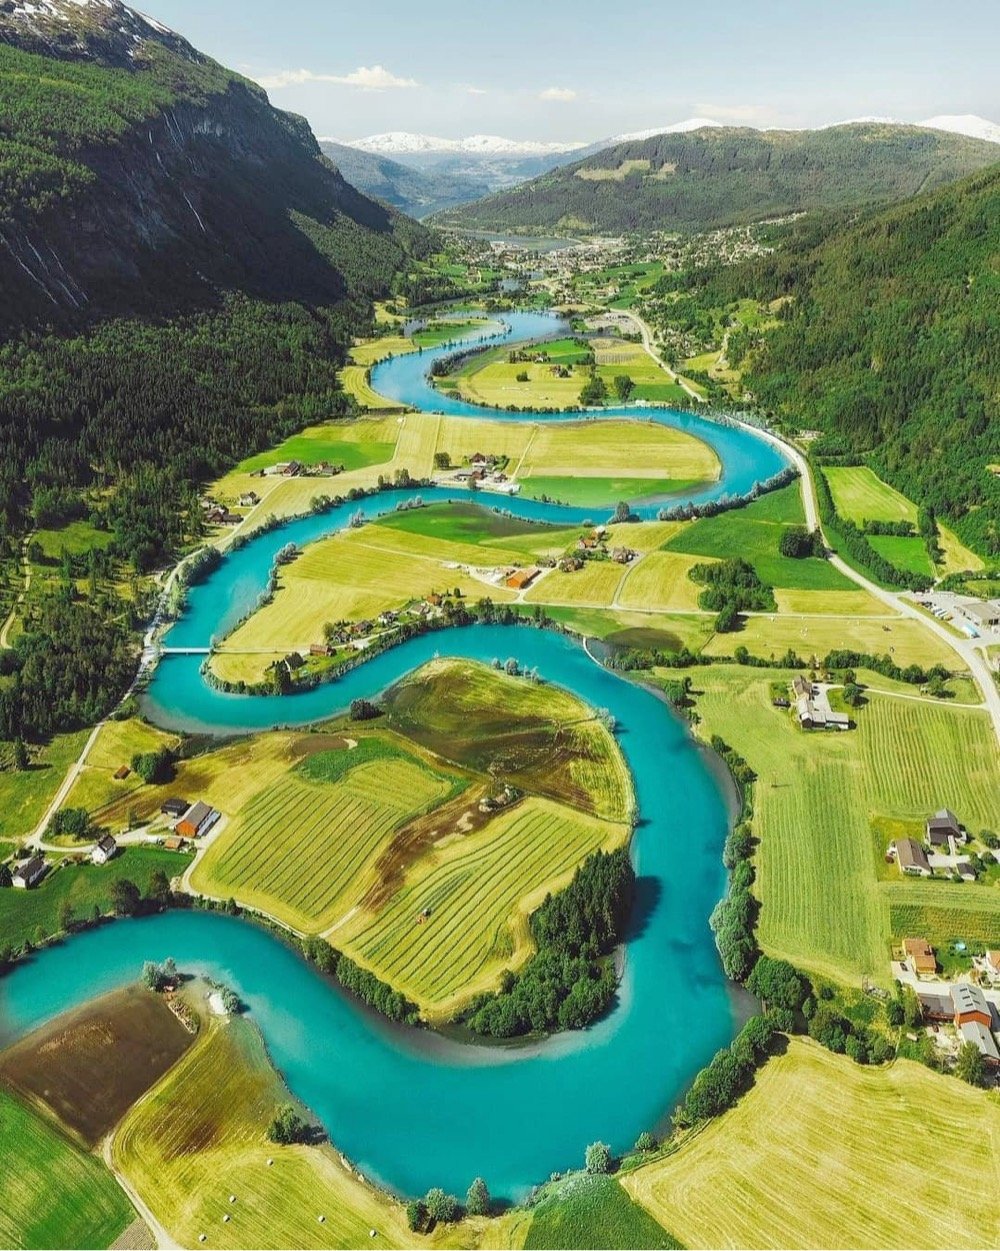 a vivid blue river meanders through a green valley